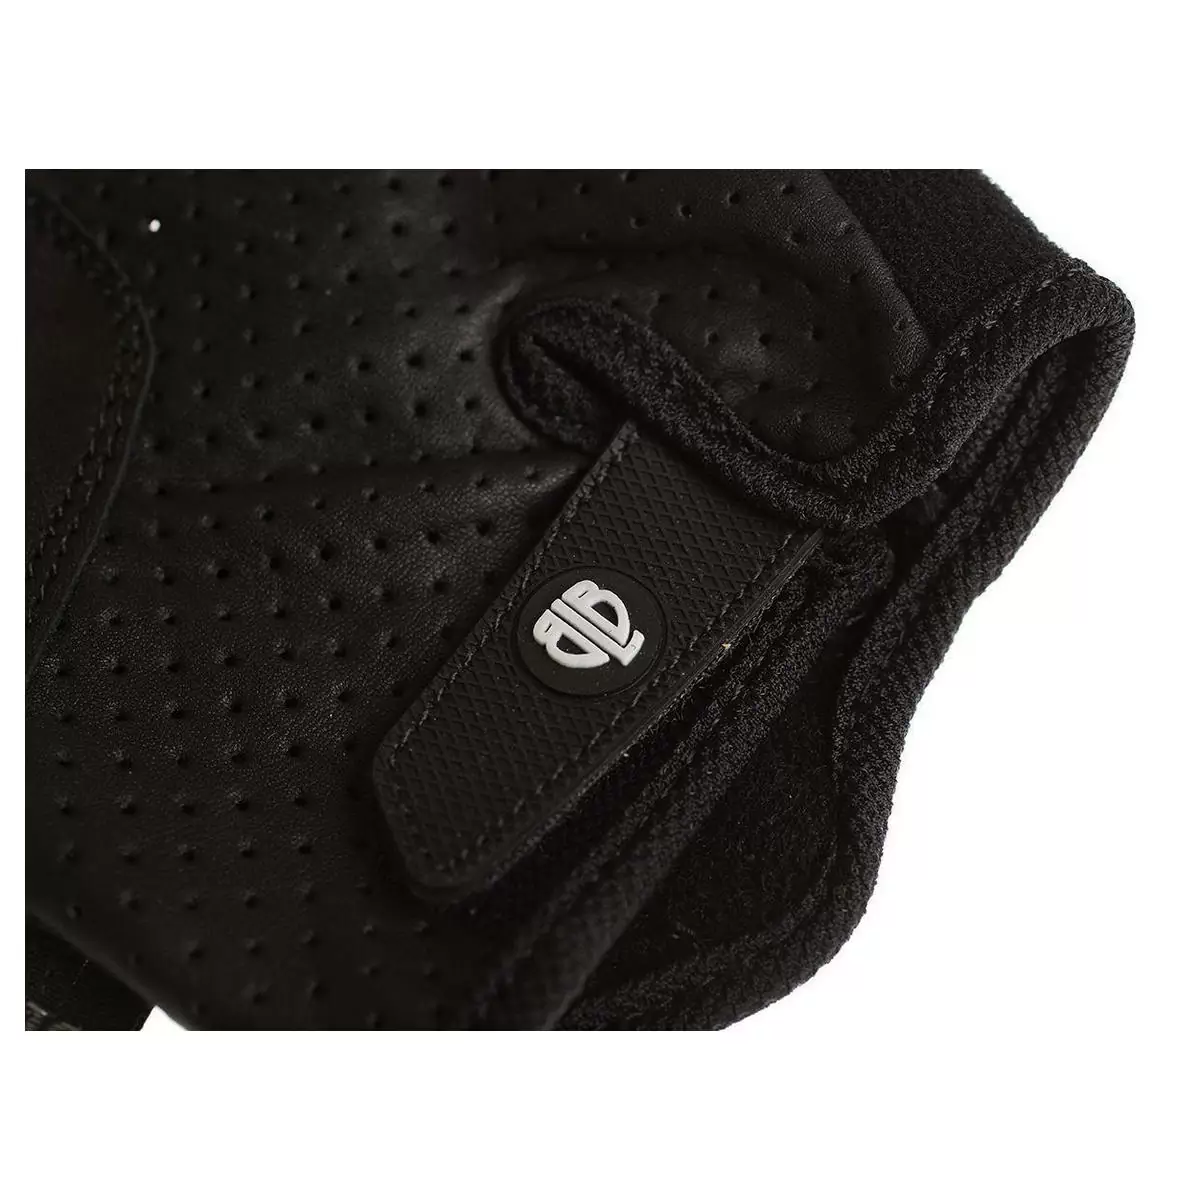 guantes de cuero classic sport talla s negro #5